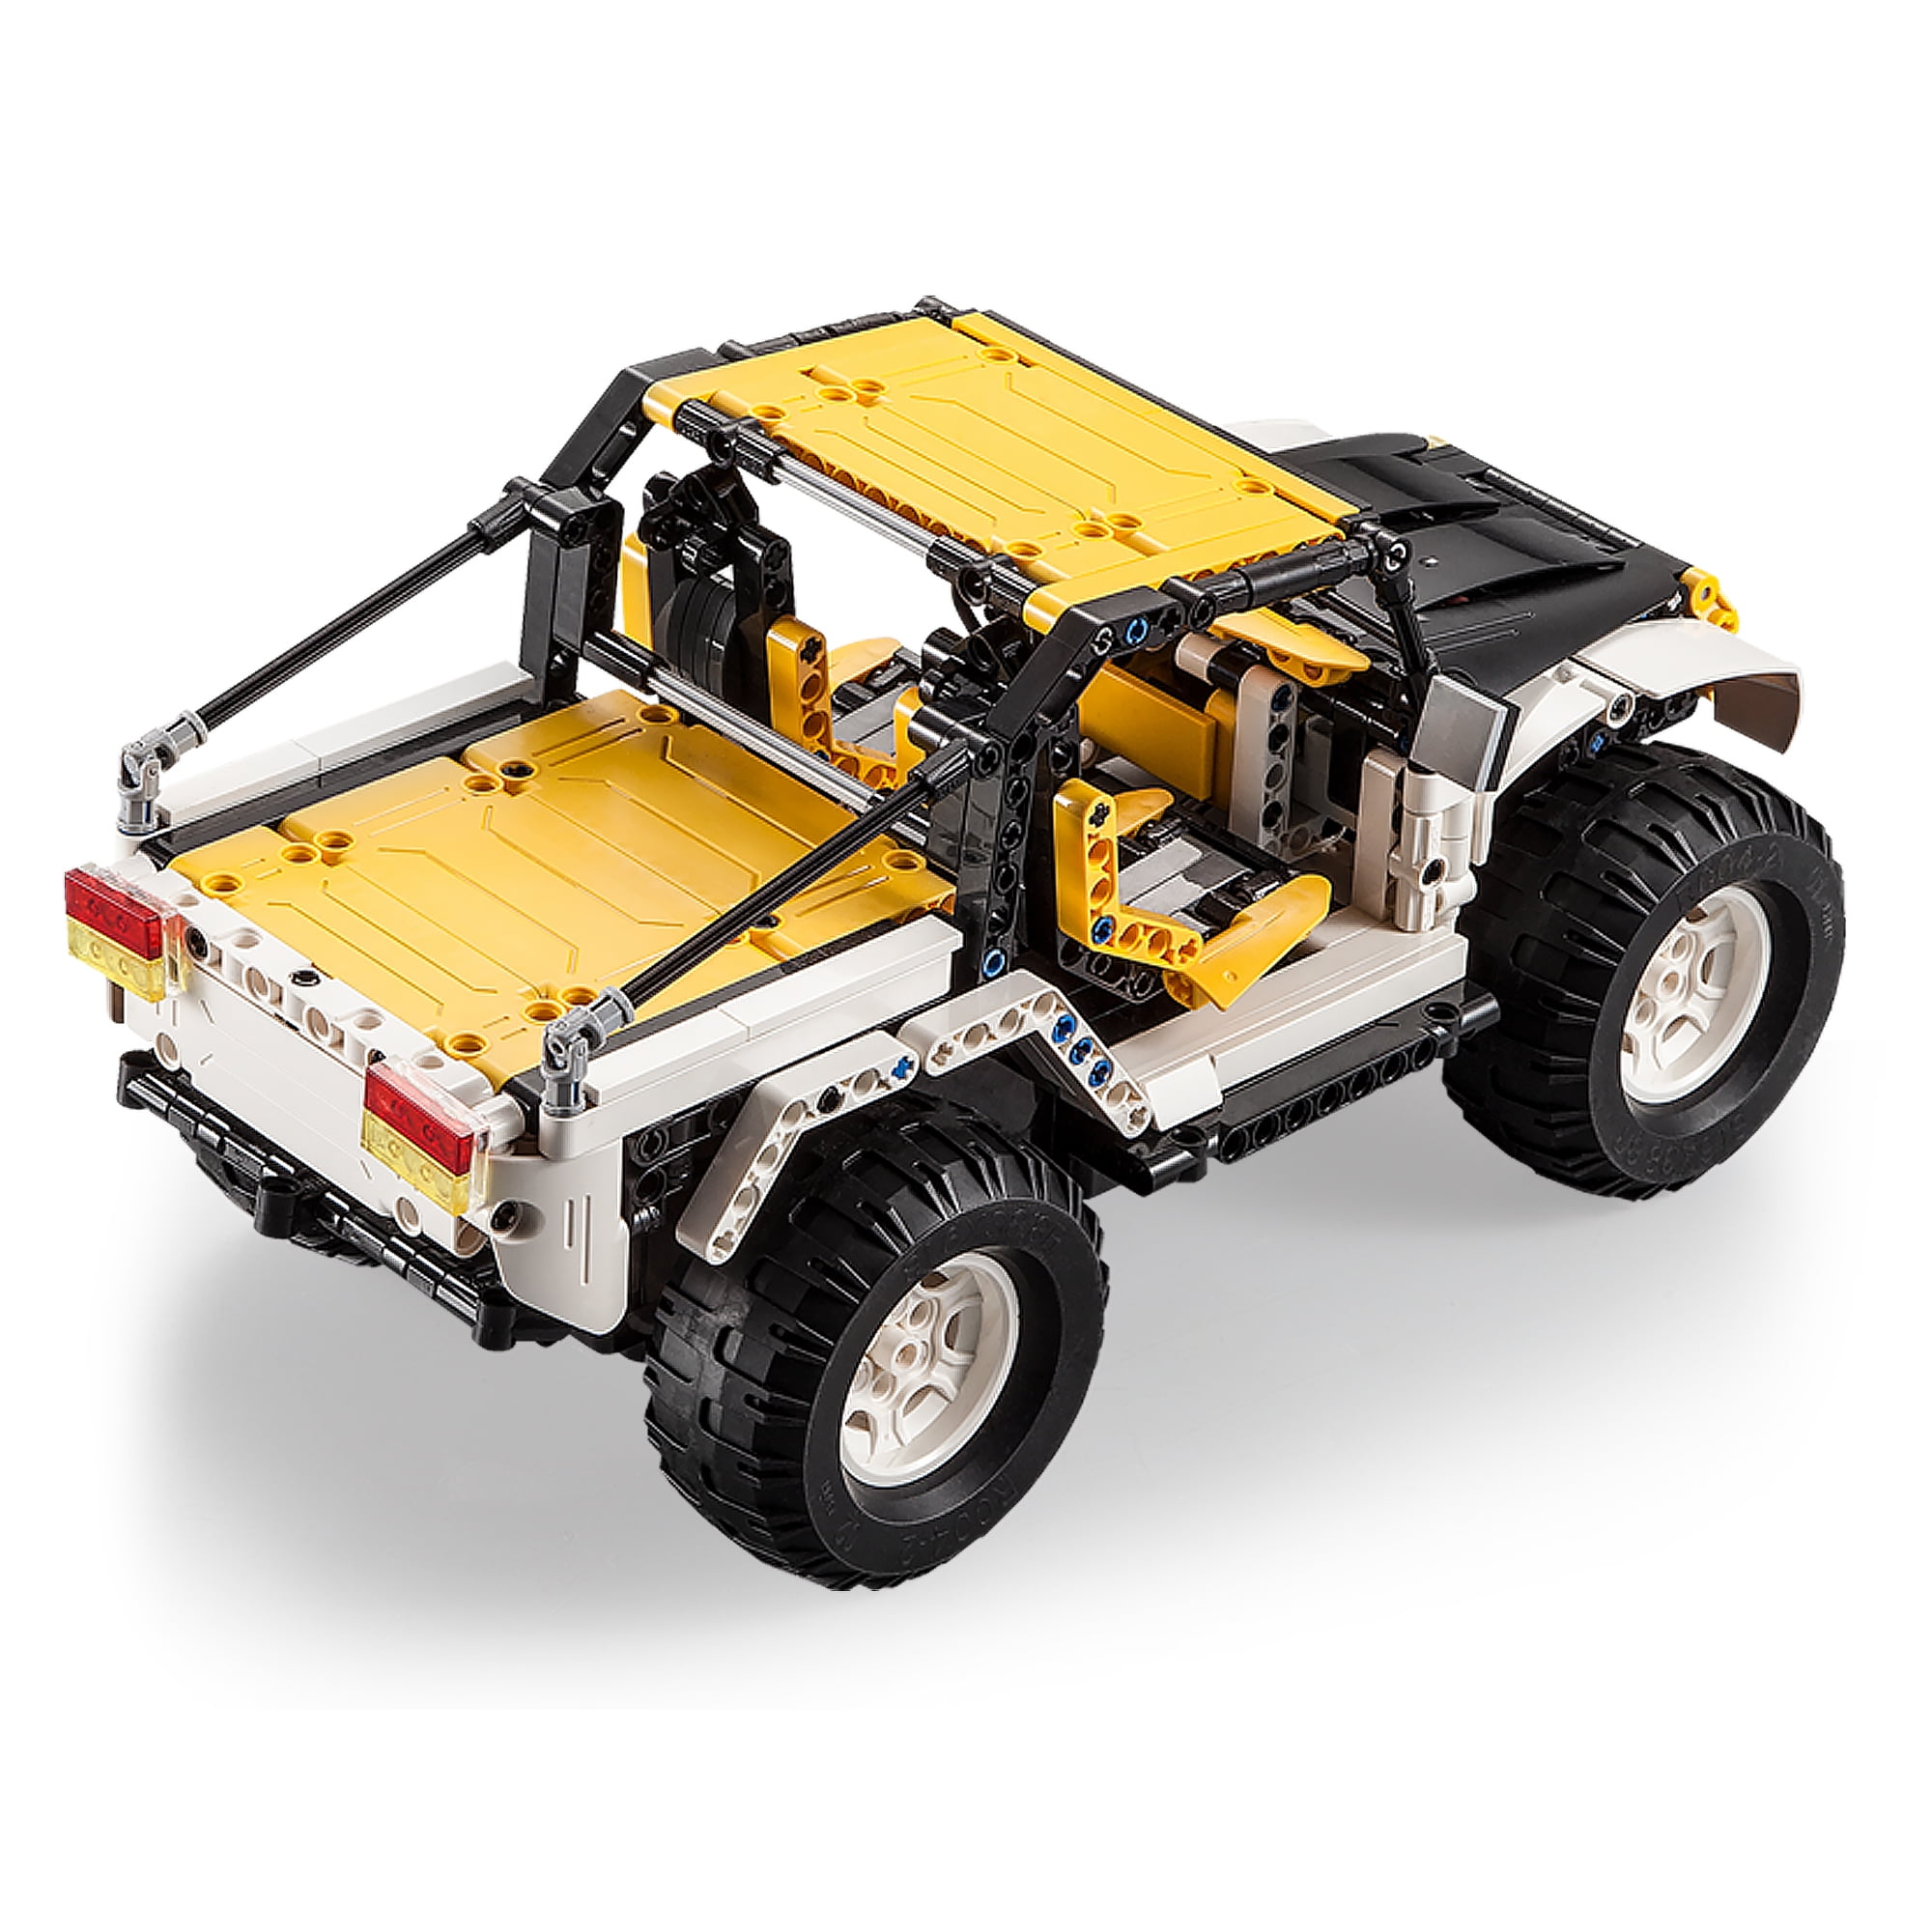 CADA Bricks Car DIY Building Blocks Master the Coolest Toys For Boy Adult  Hobby 1:8 3D Model C61041